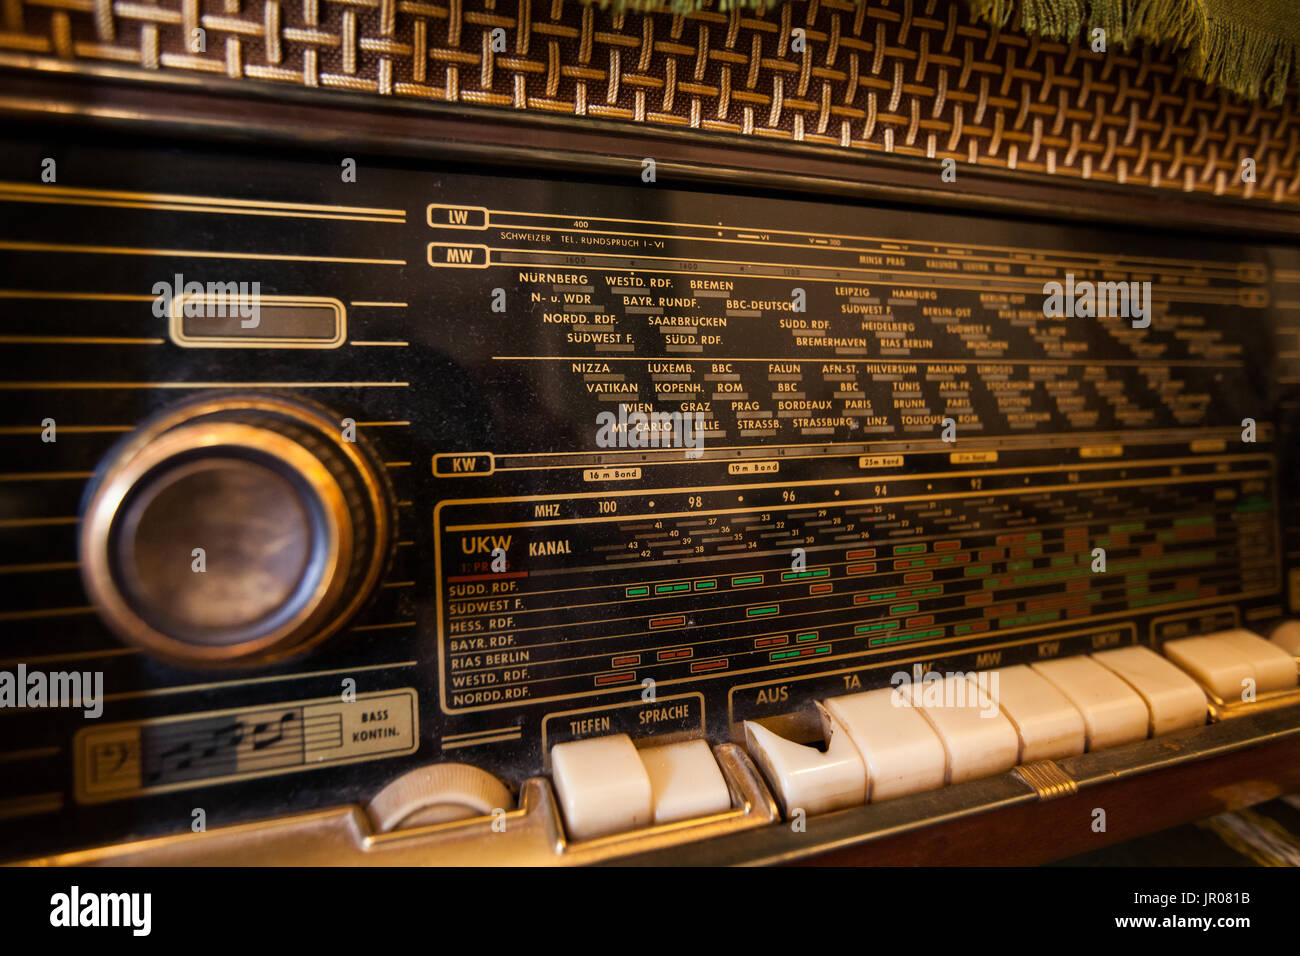 Retro old radio, vintage radio scale, closeup Stock Photo - Alamy